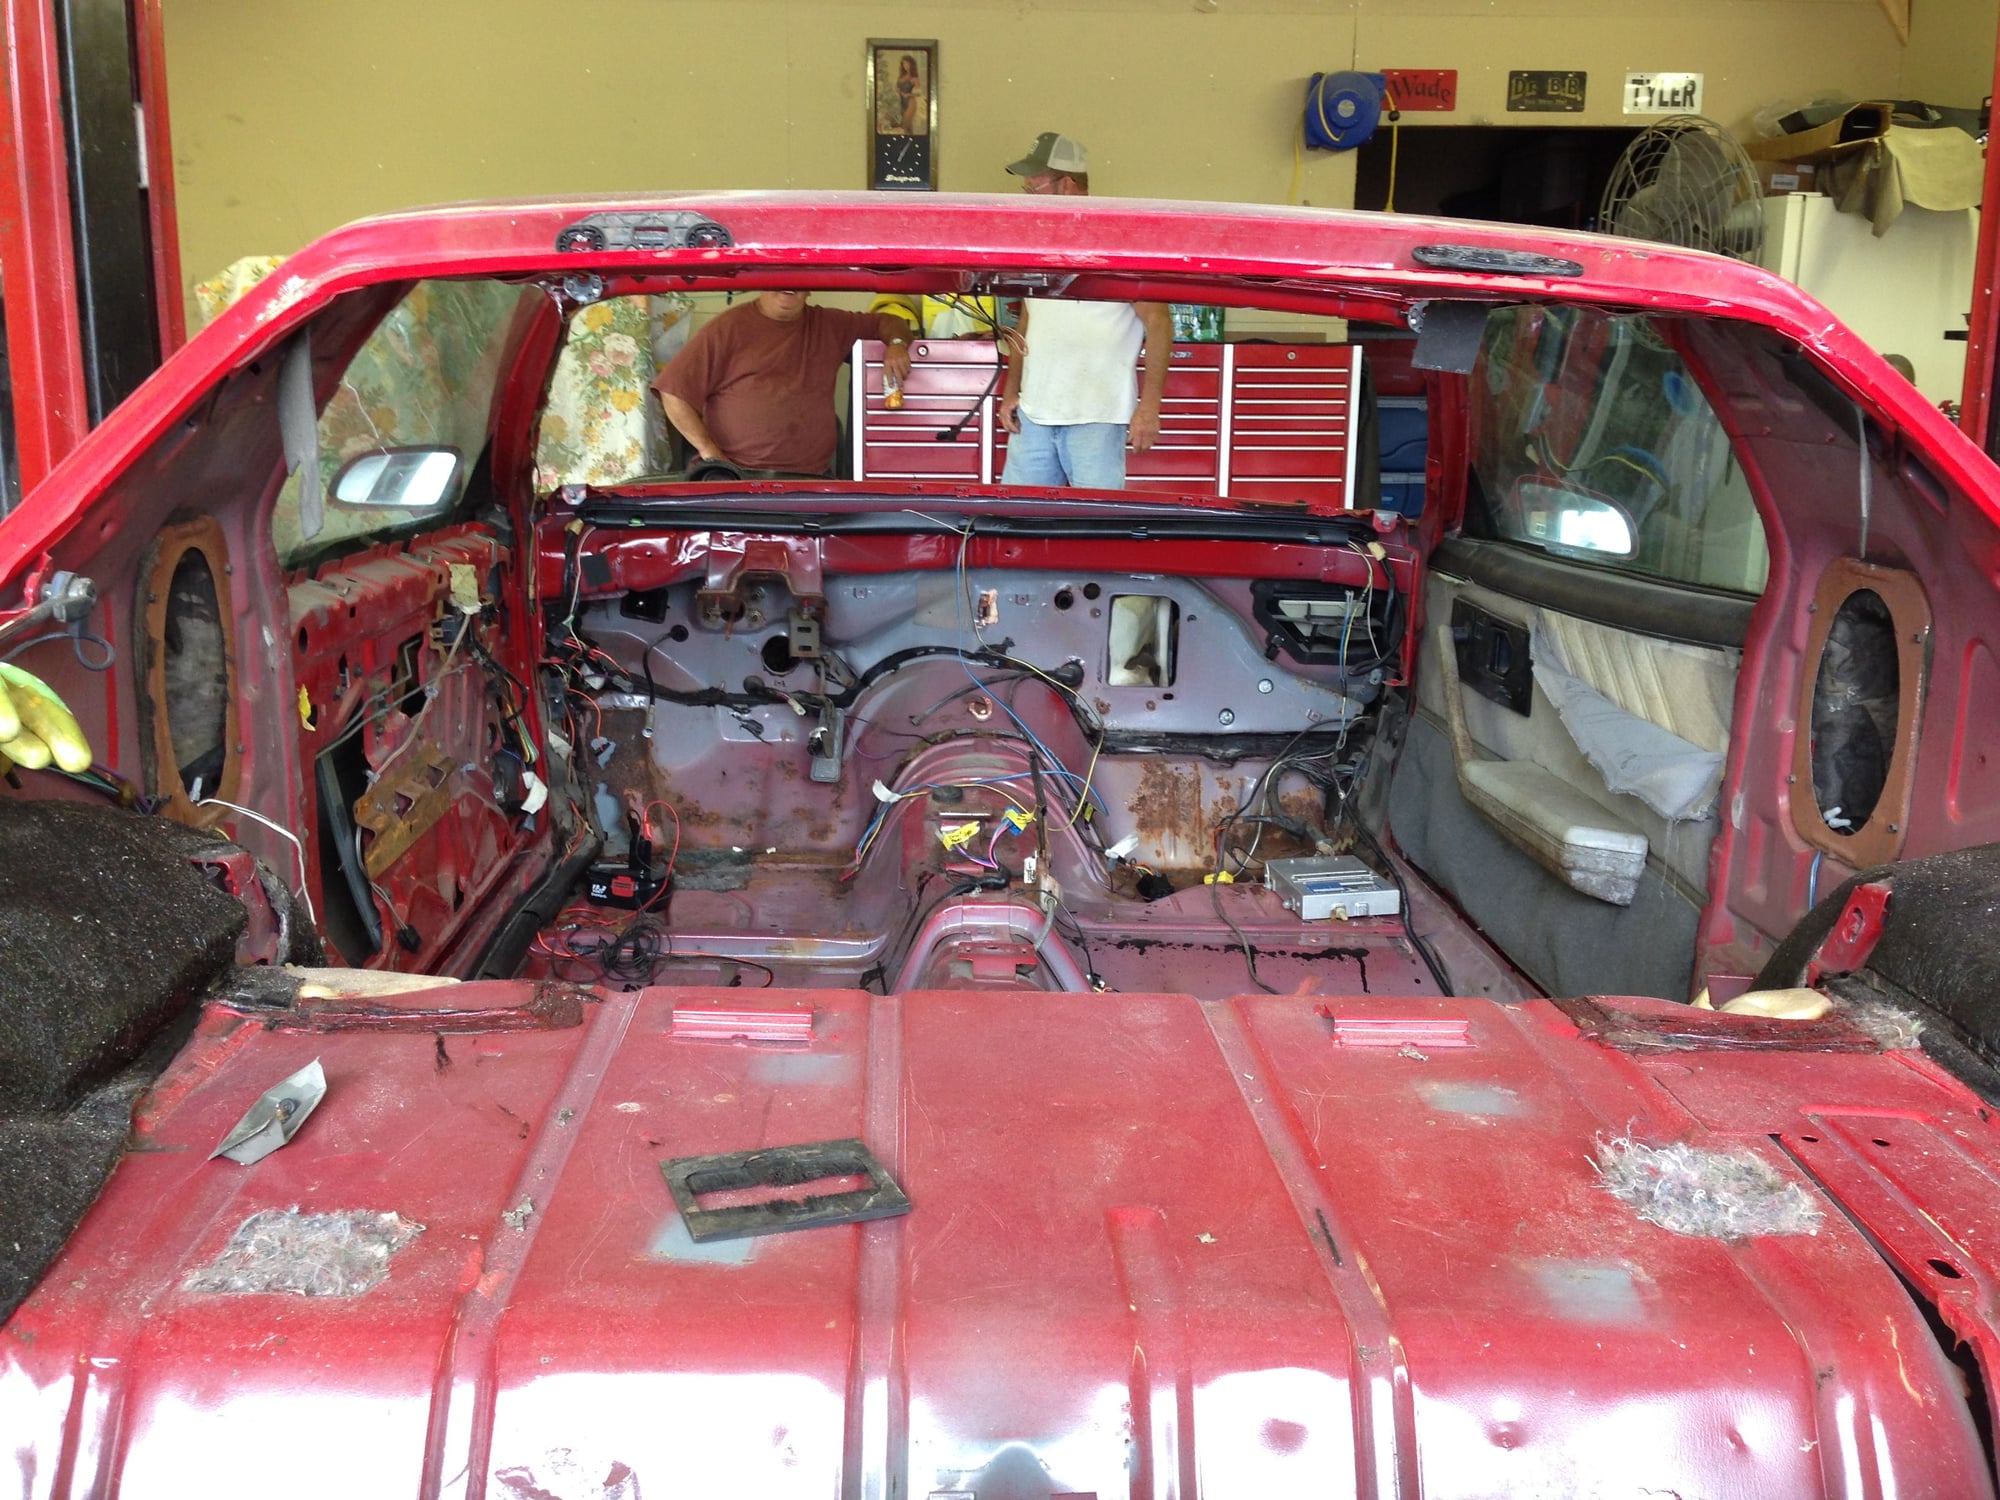 88camaro #projectcar #restoration #thirdgencamaro